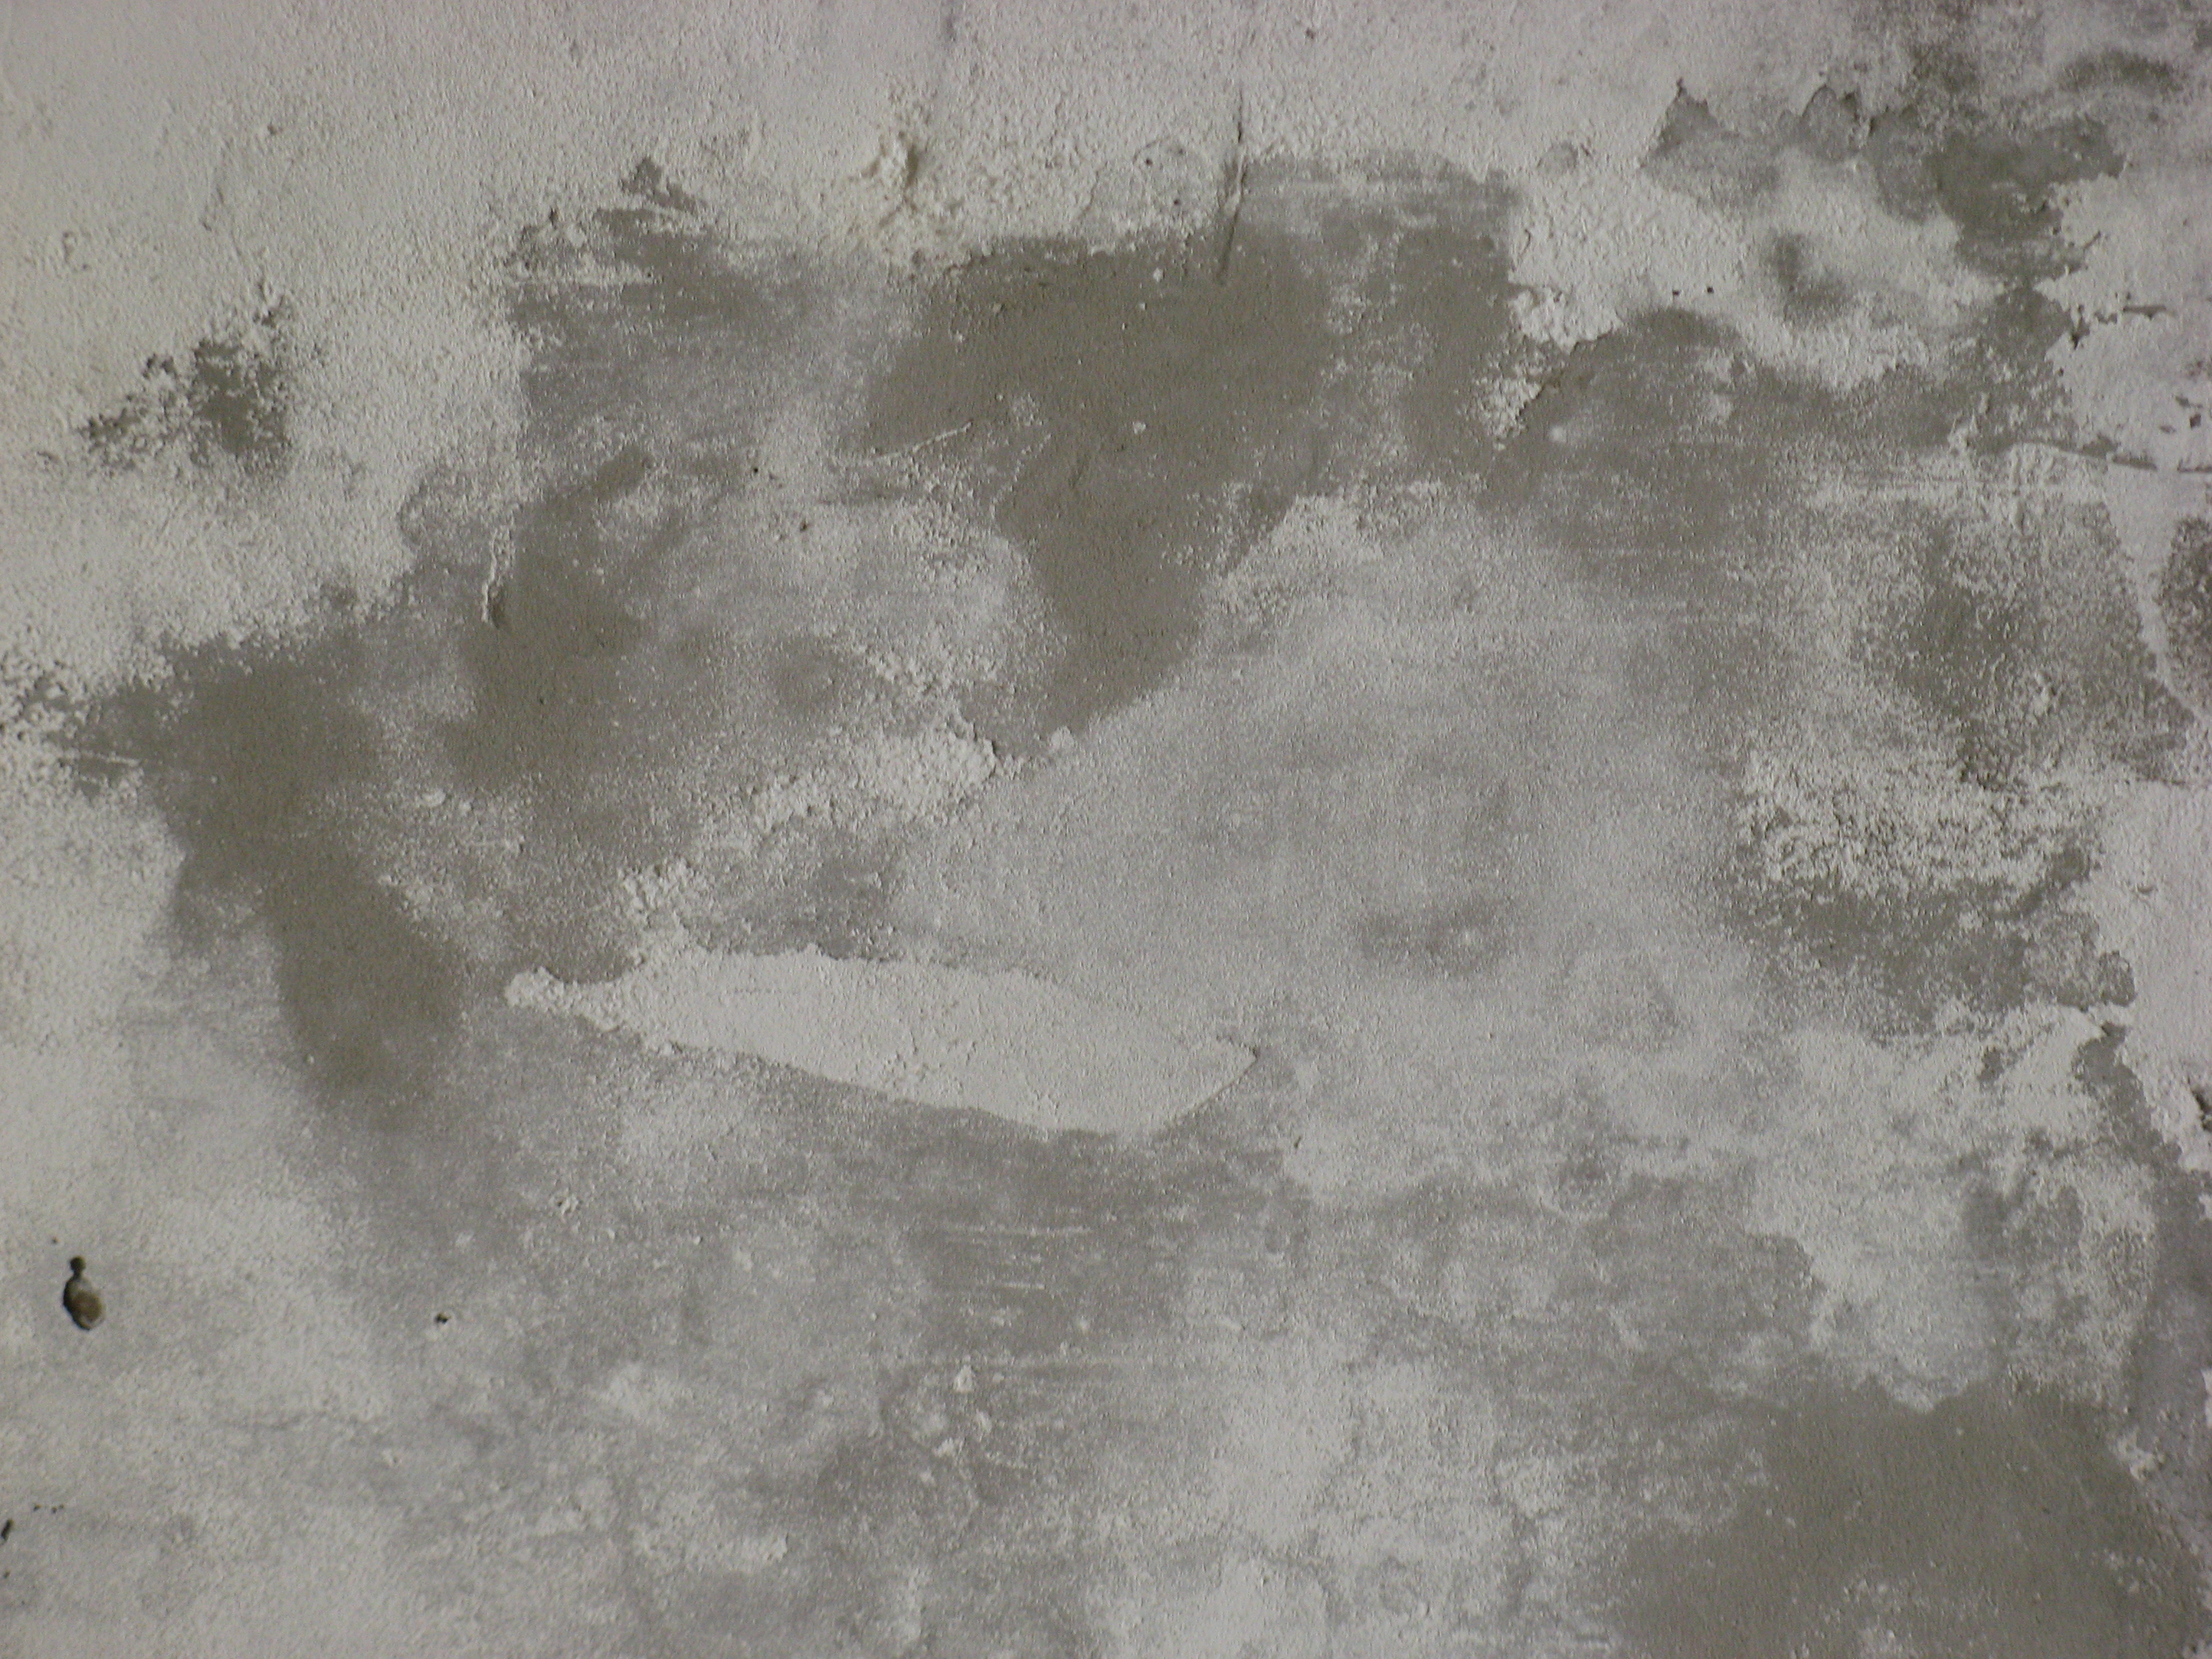 Free Grunge texture (concrete, plaster, wall)